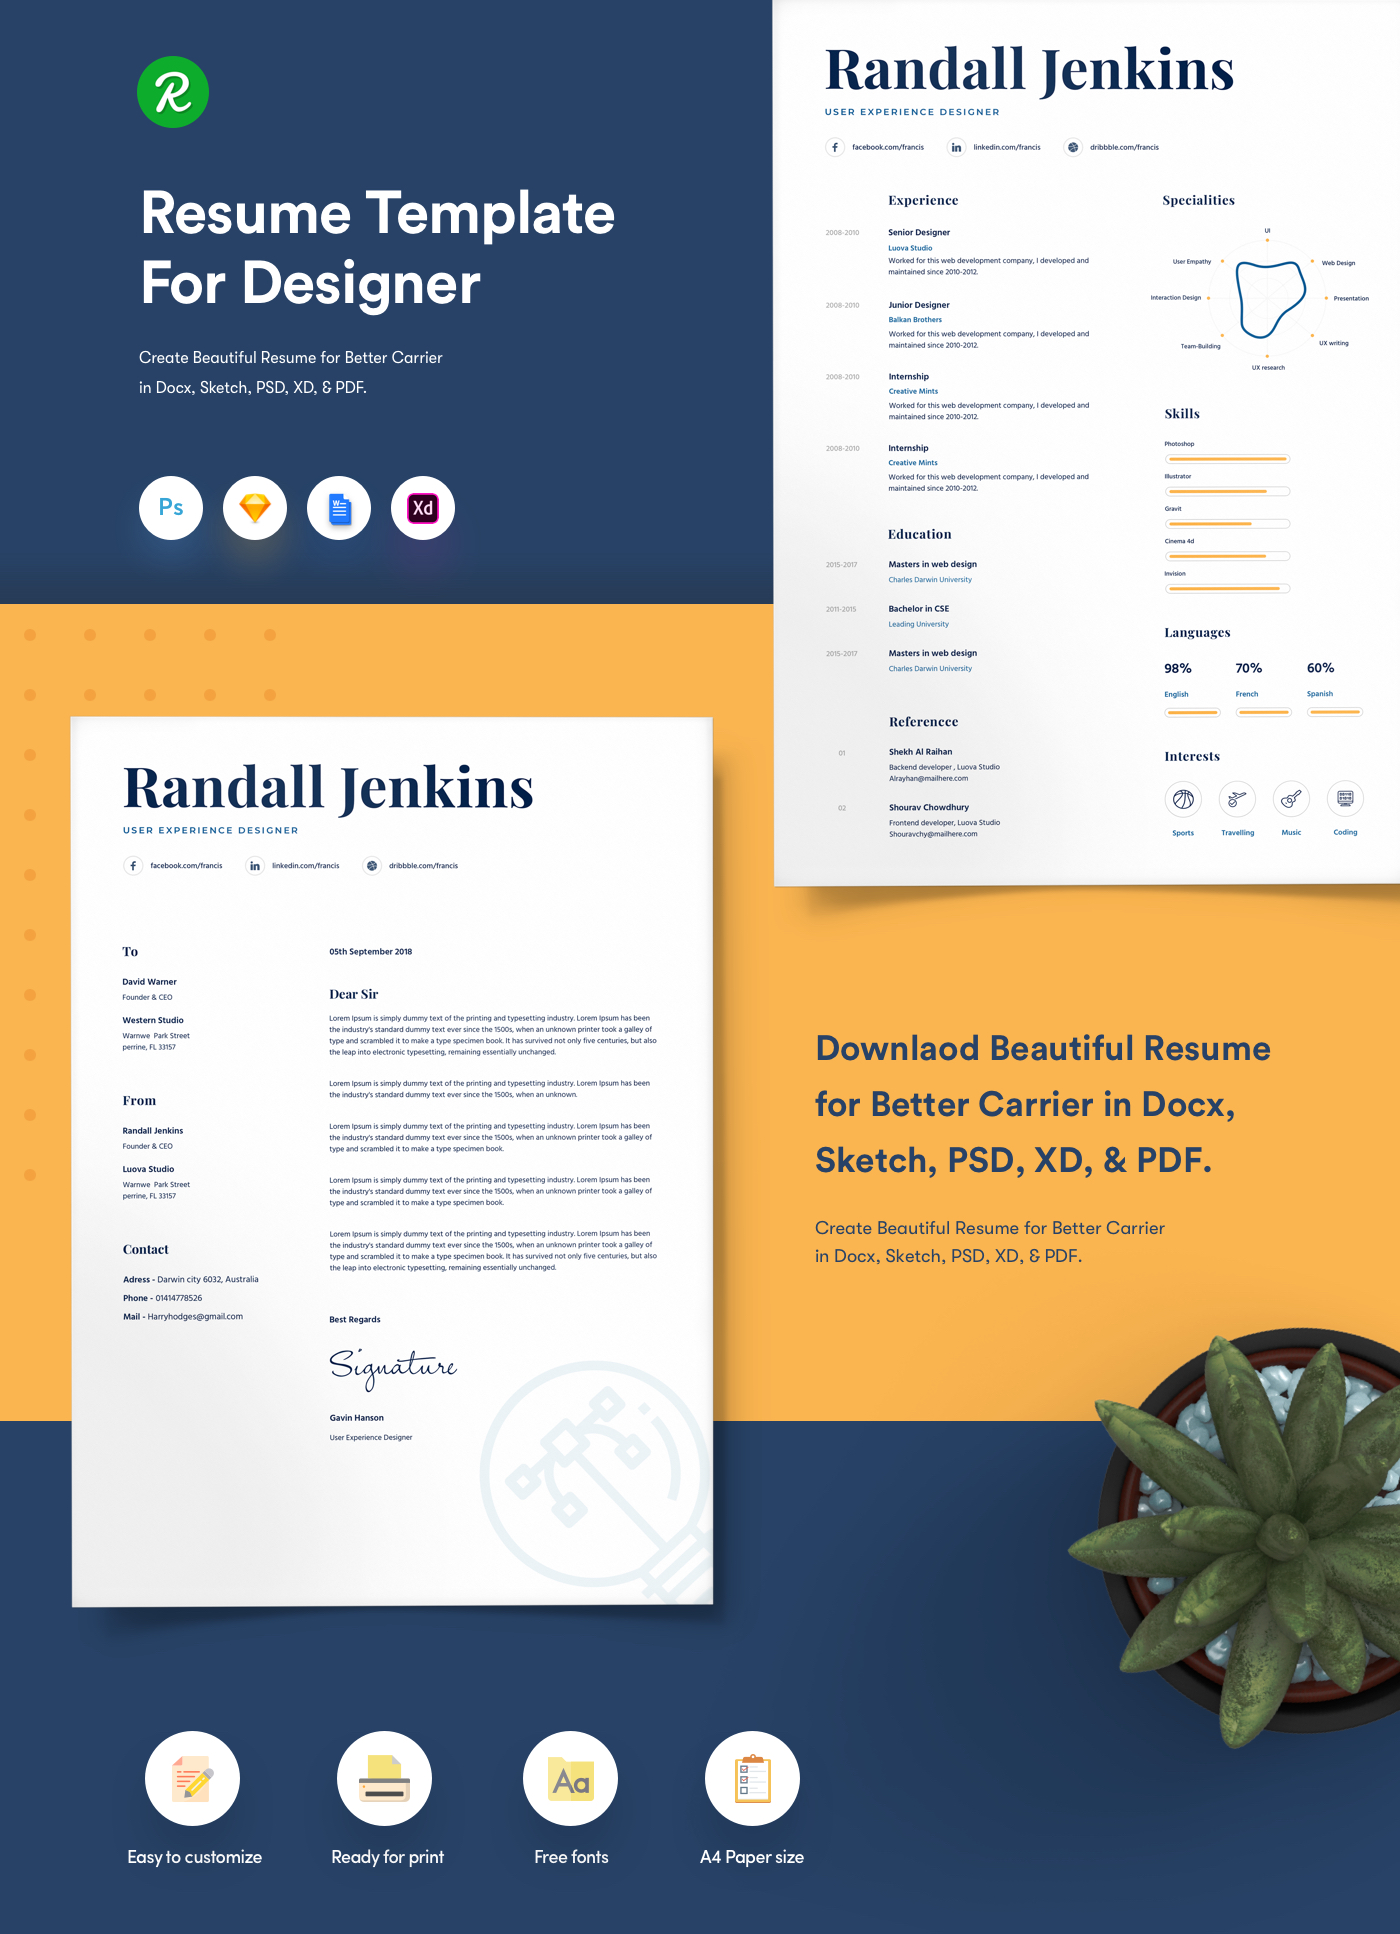 1. Resume Template For Designers With Portfolio 